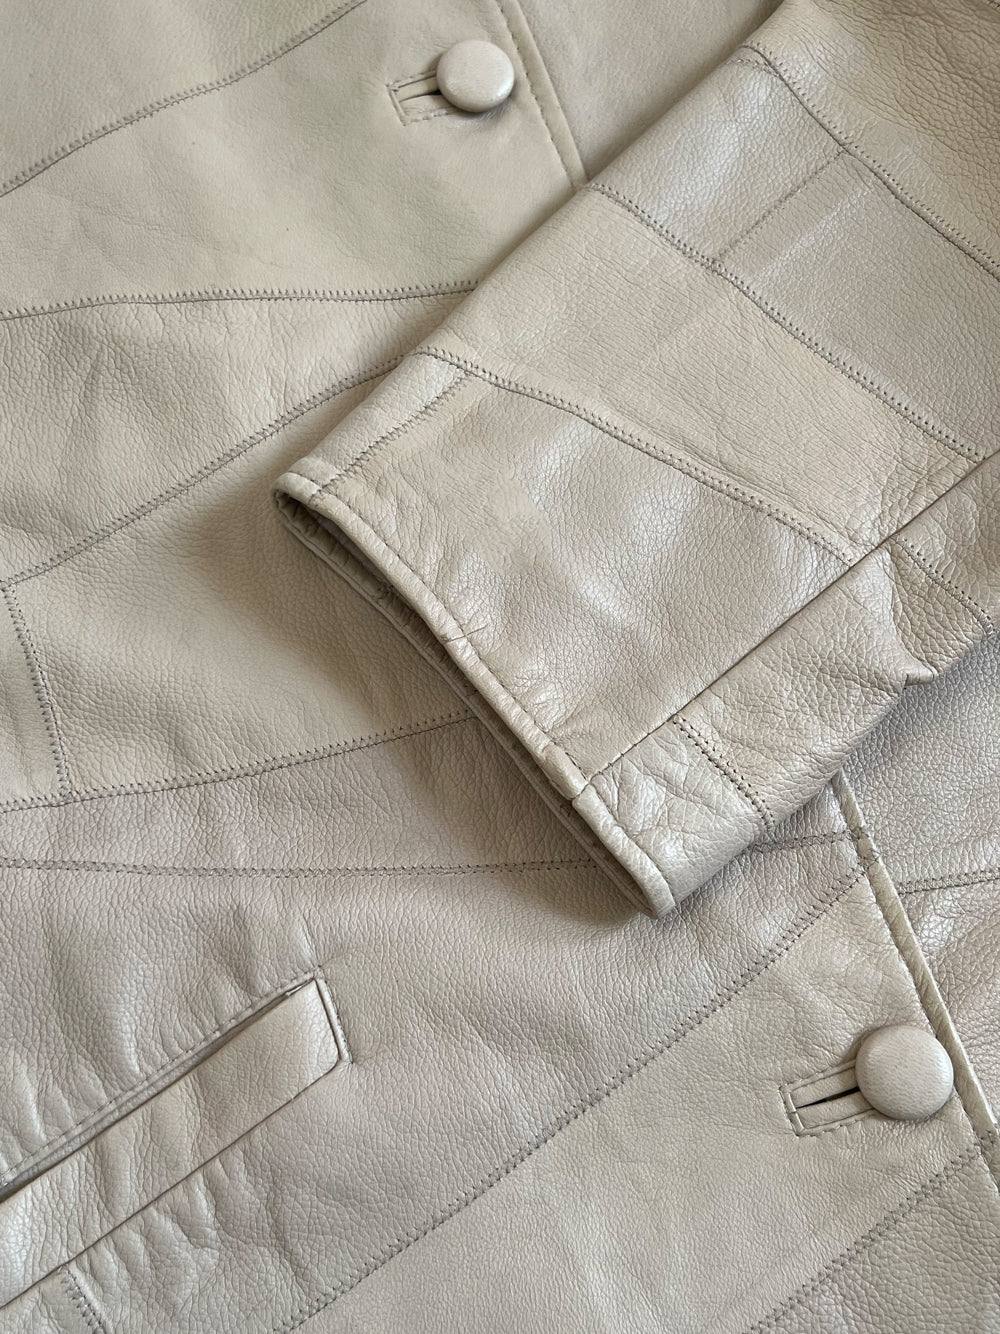 Vintage Patchwork Collarless Leather Jacket Size L (12-14)